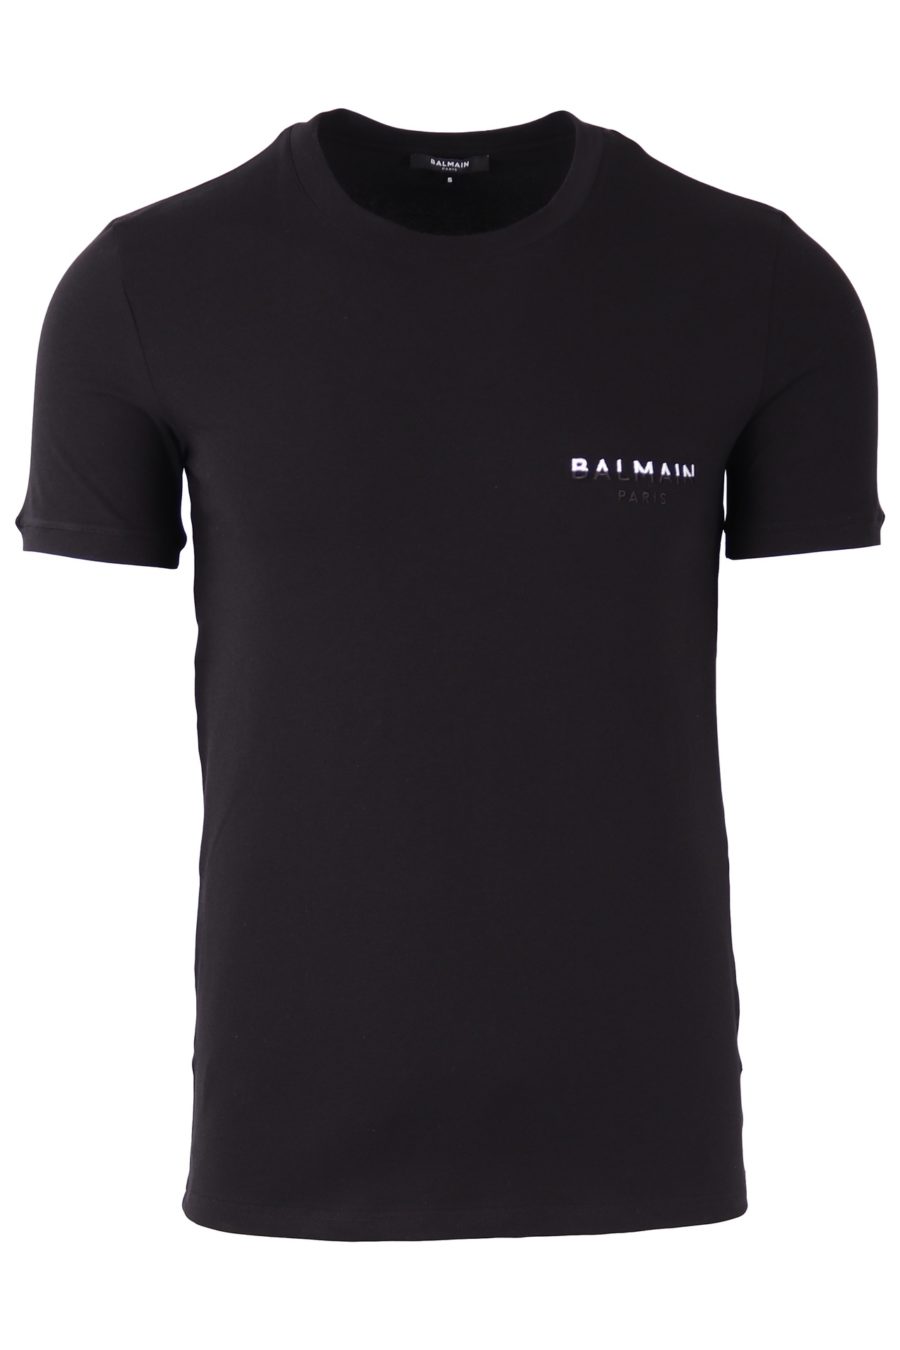 Camiseta interior Balmain negra con logo blanco y negro - d6ffef03ab8d457db68bc013bcf1a4c2d39ccd9a